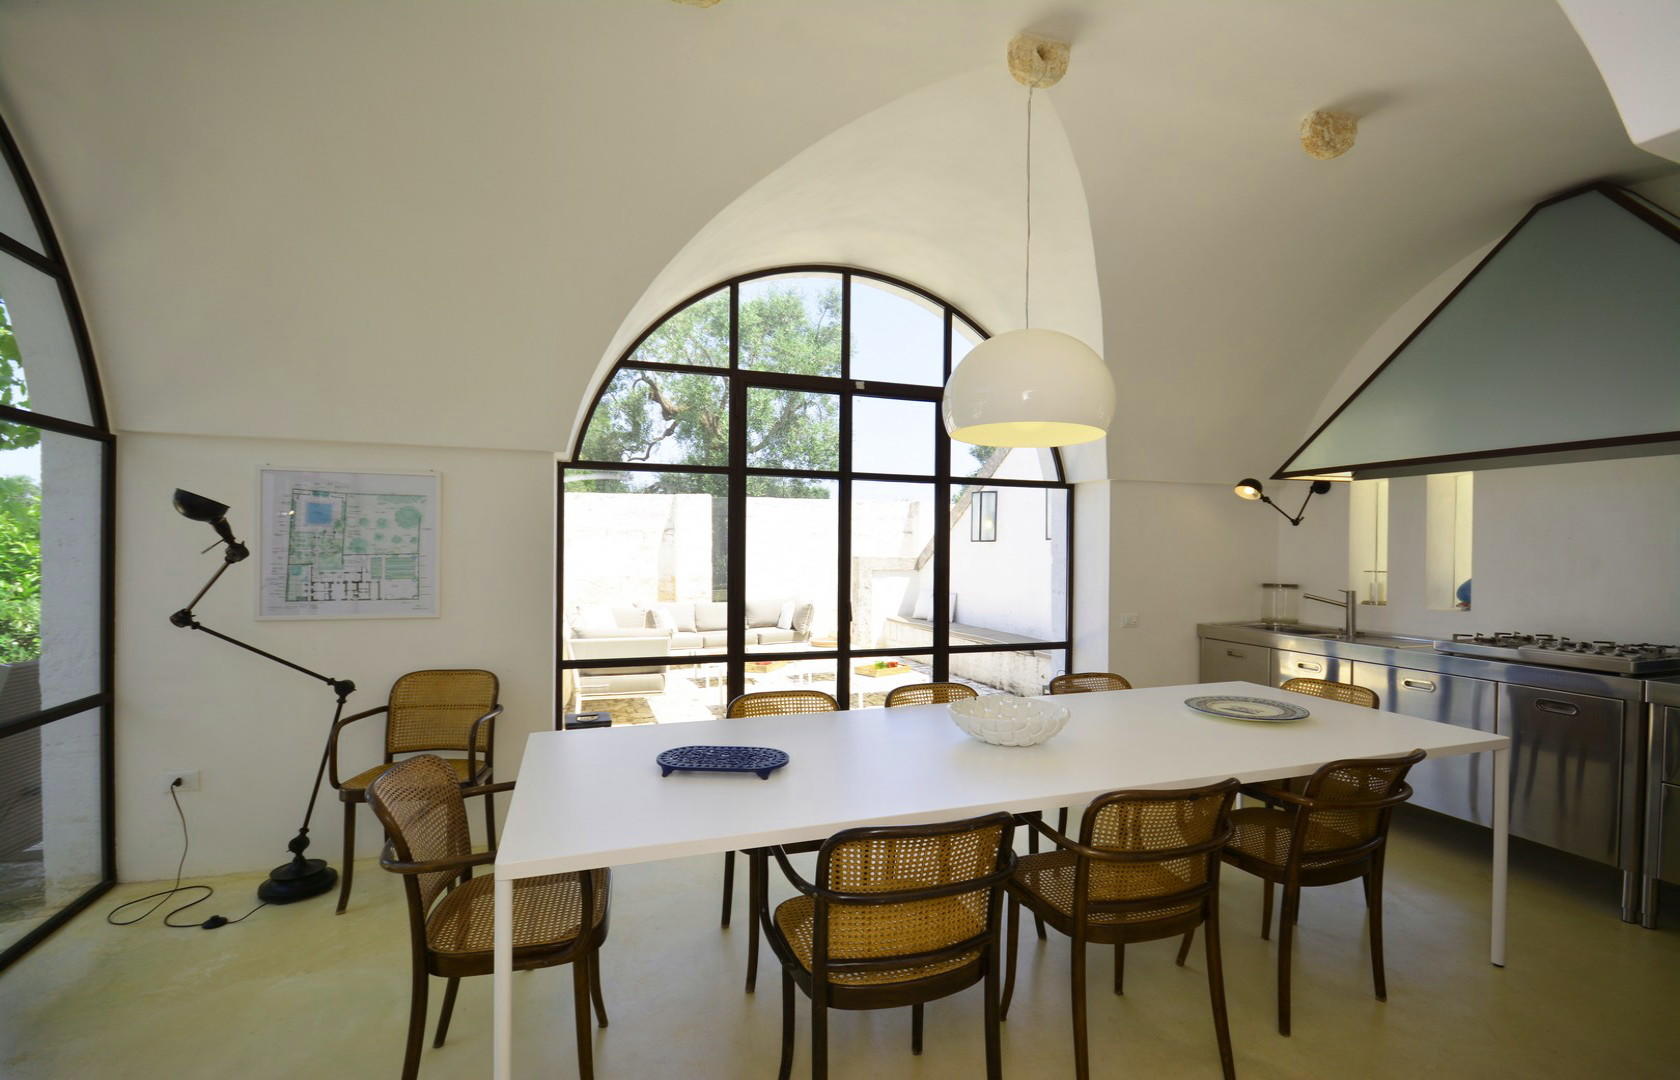 Ground floor, dining room with design kitchen corner